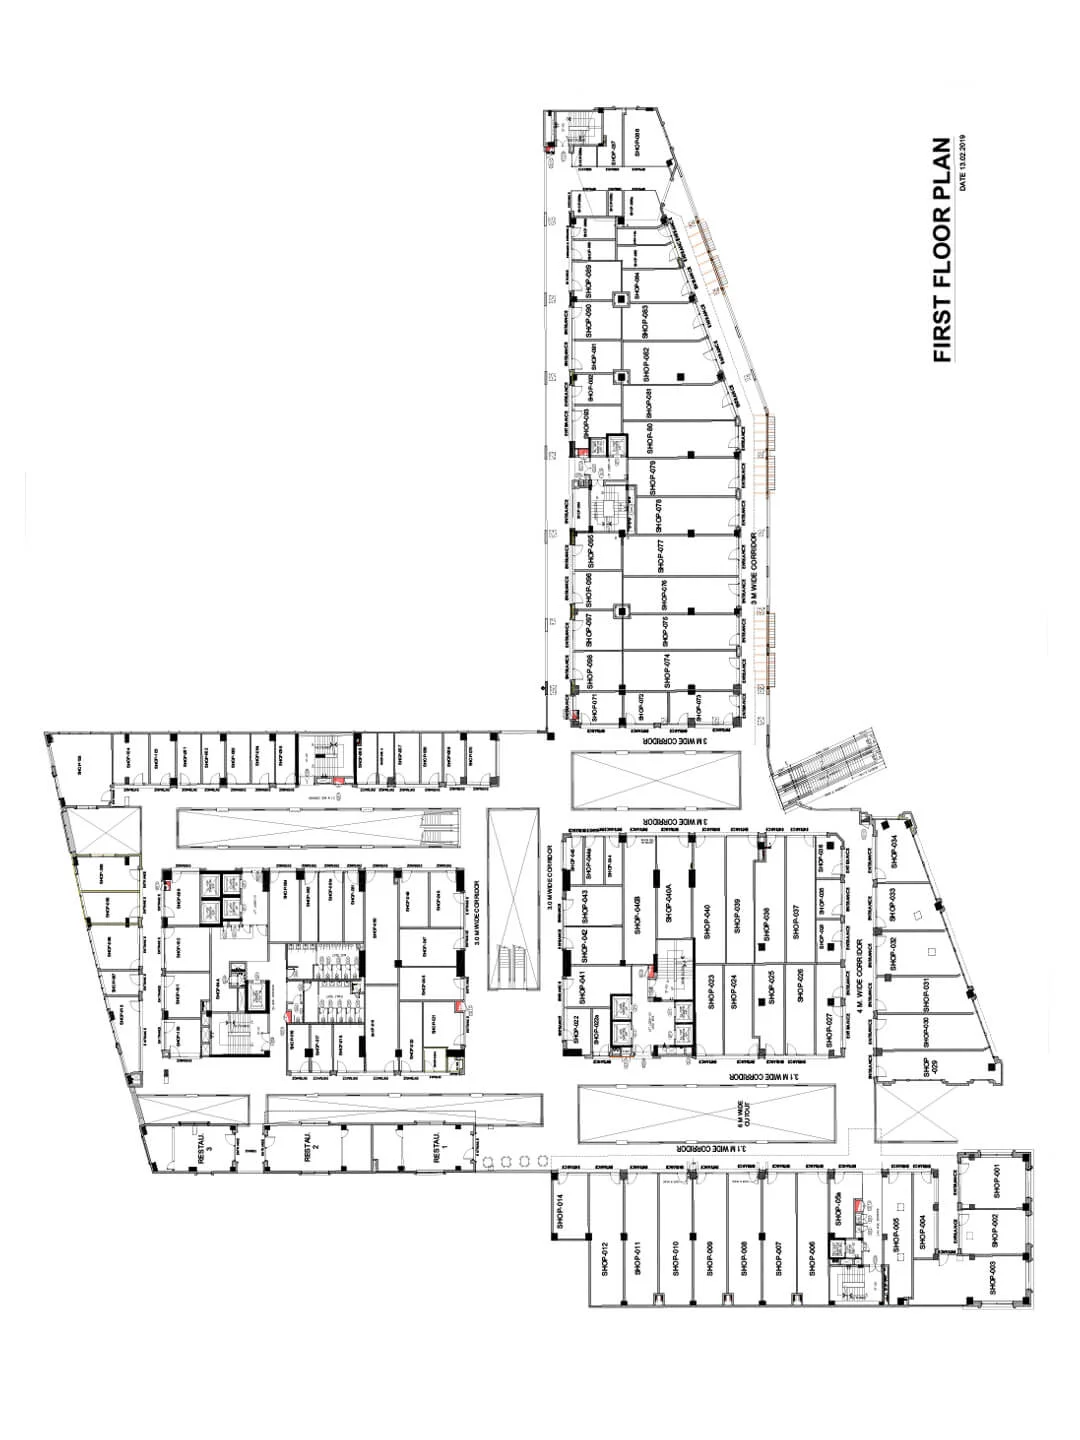 Aipl Street first floor plan layout